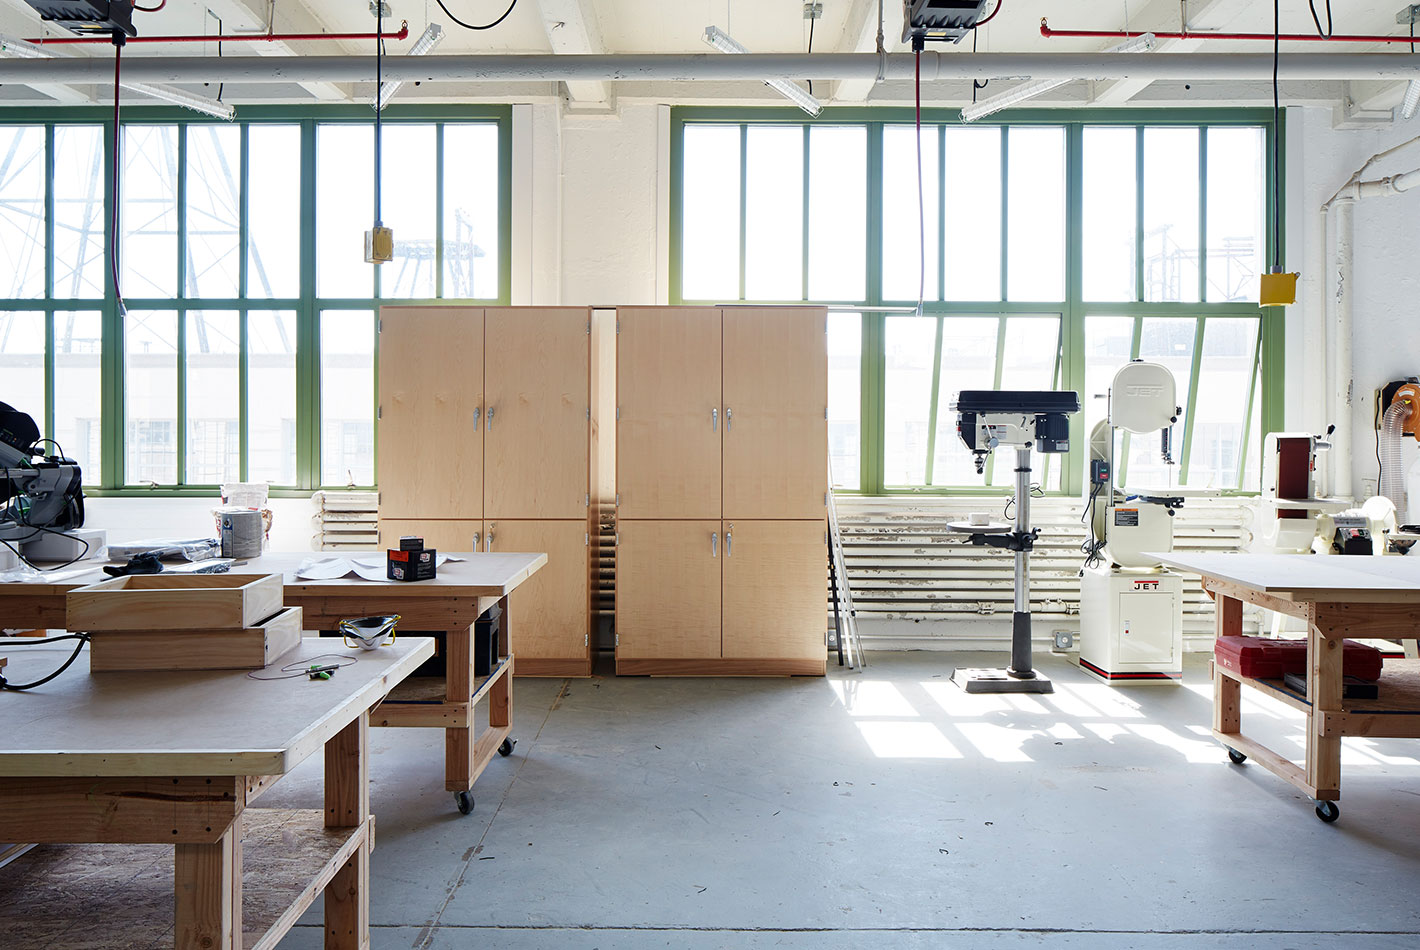 A light-filled workspace inside West Elm's Maker's Studio. Industrial tables and shelves populate the room